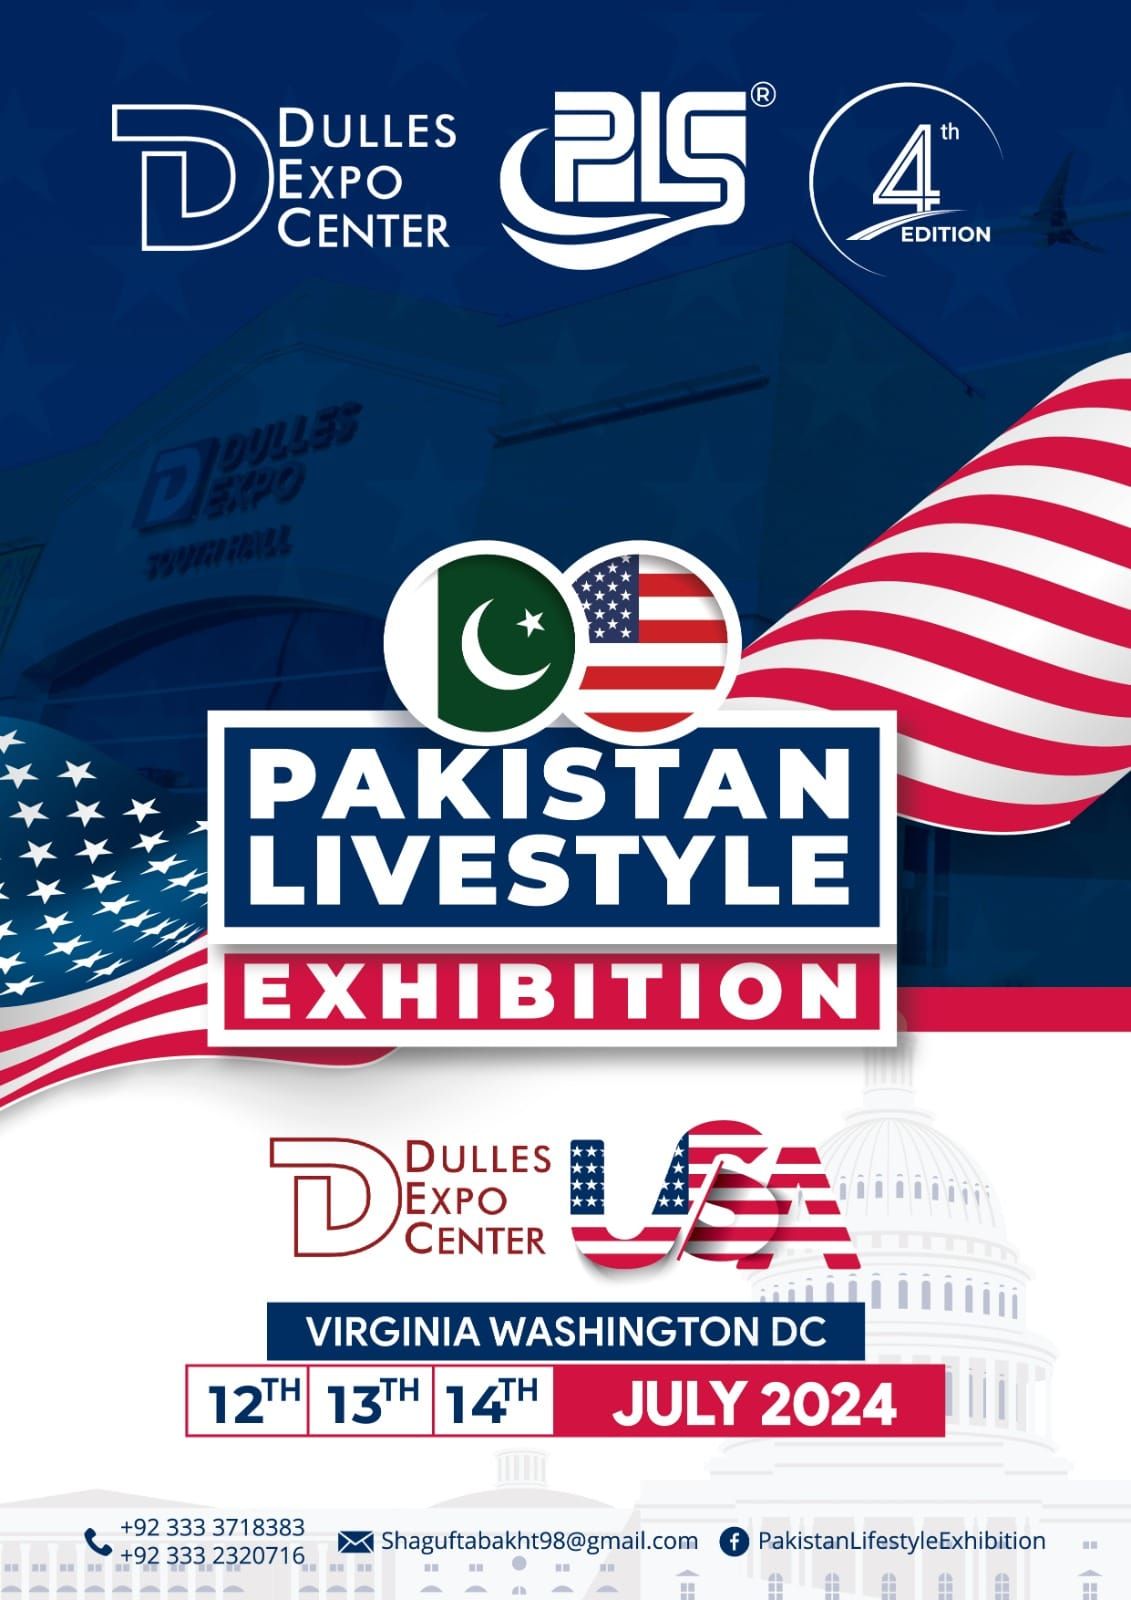 Pakistan Live Style at Dulles Expo Center Virginia USA